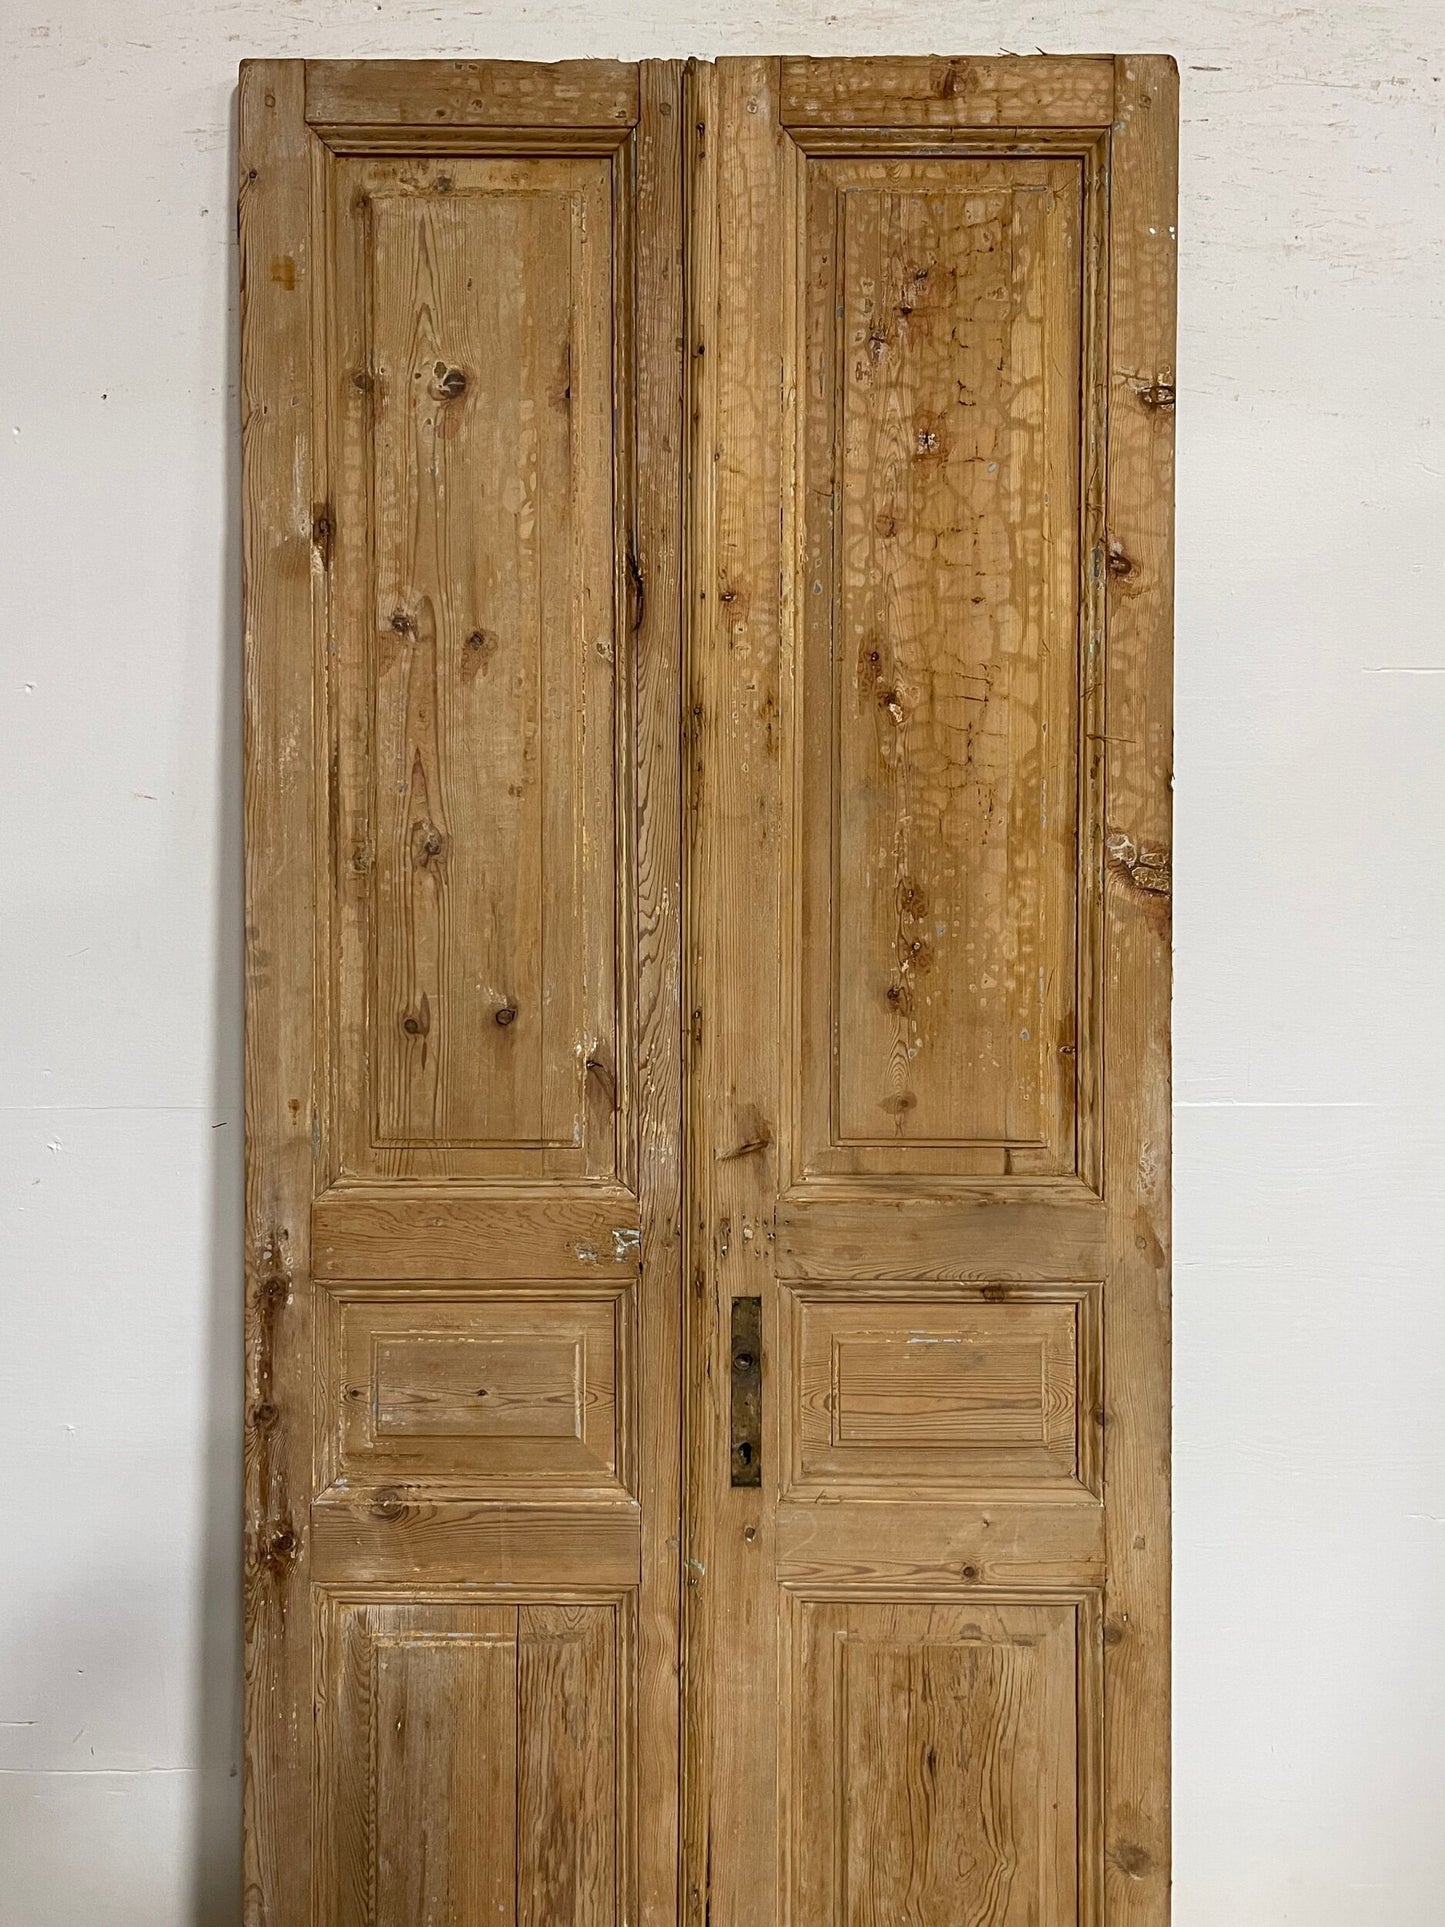 Antique French panel doors (92x38) I109